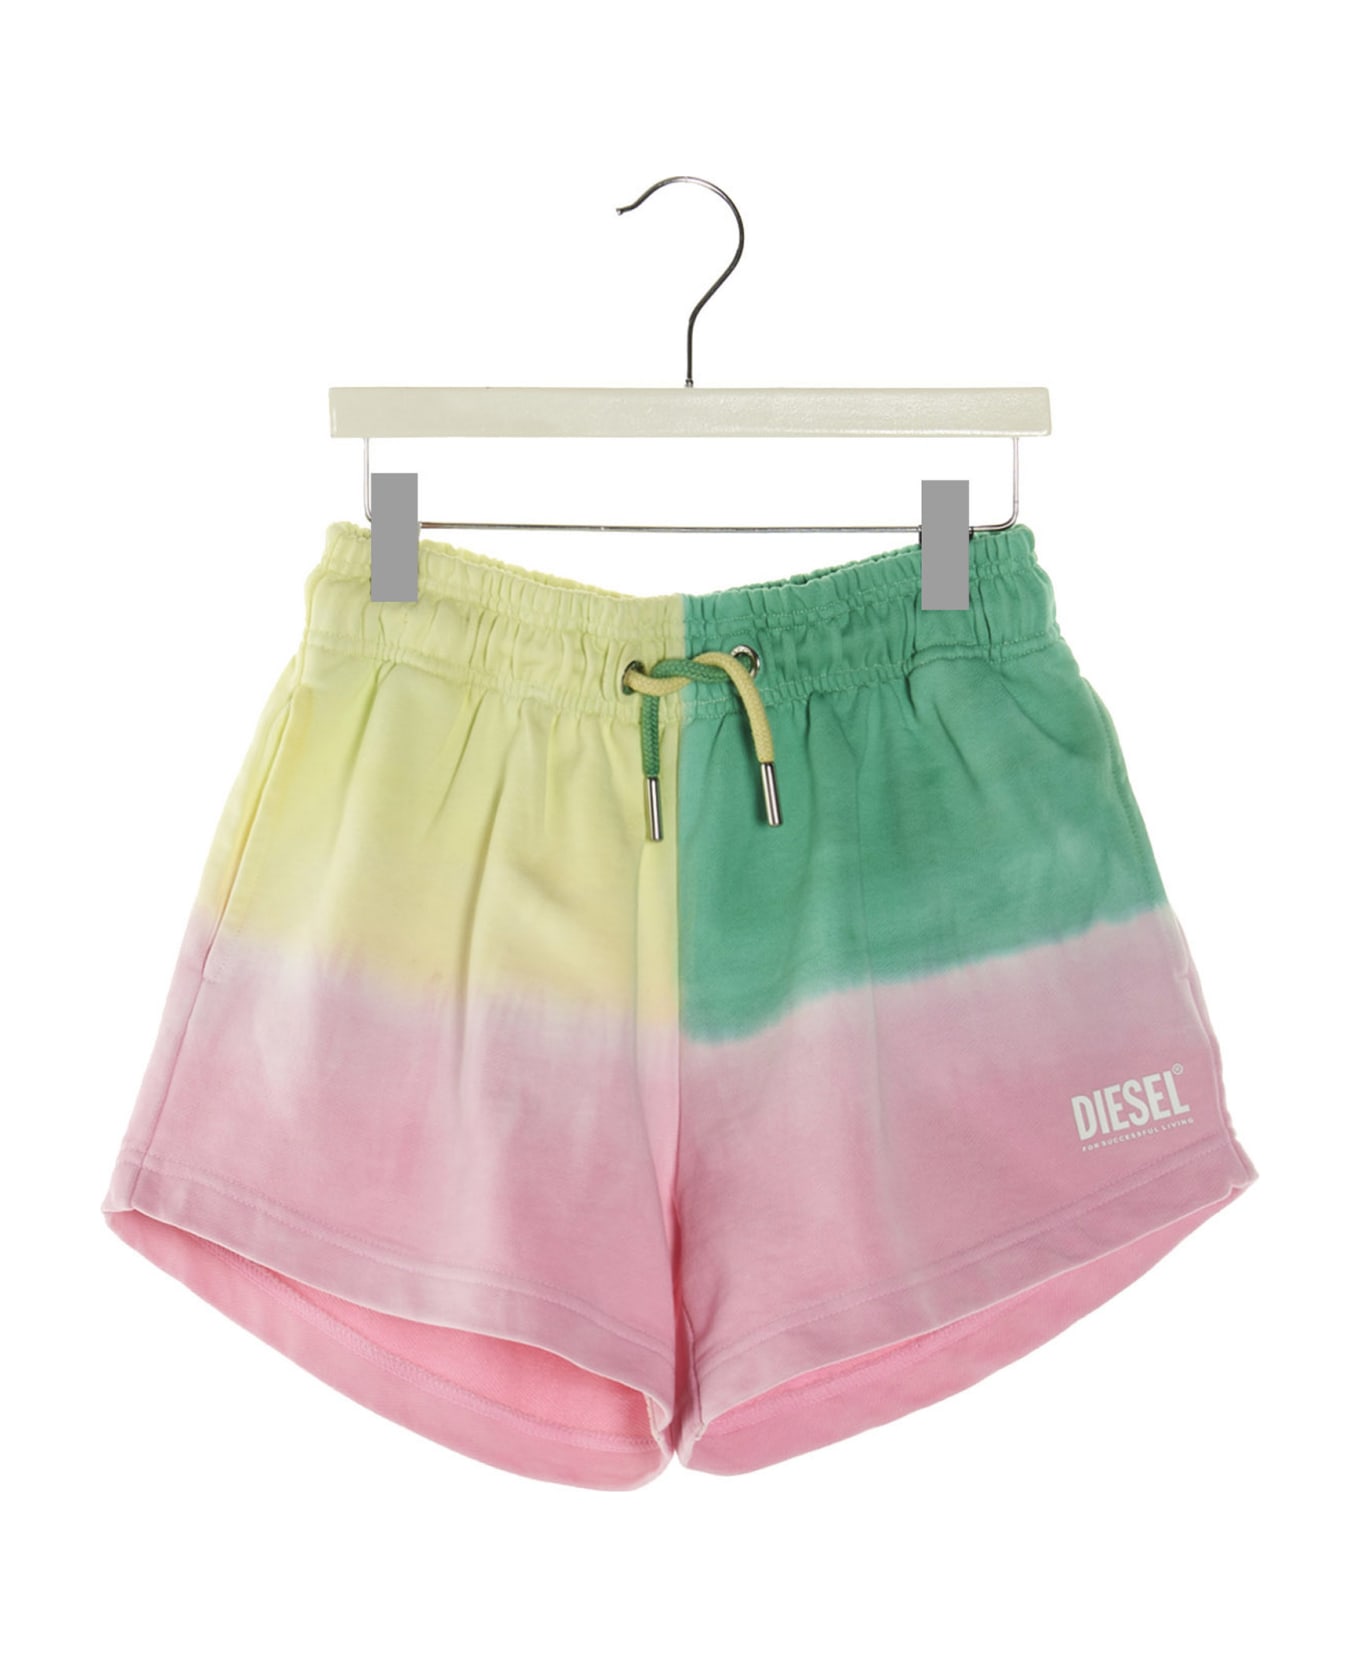 Diesel 'panidy' Shorts - Multicolor